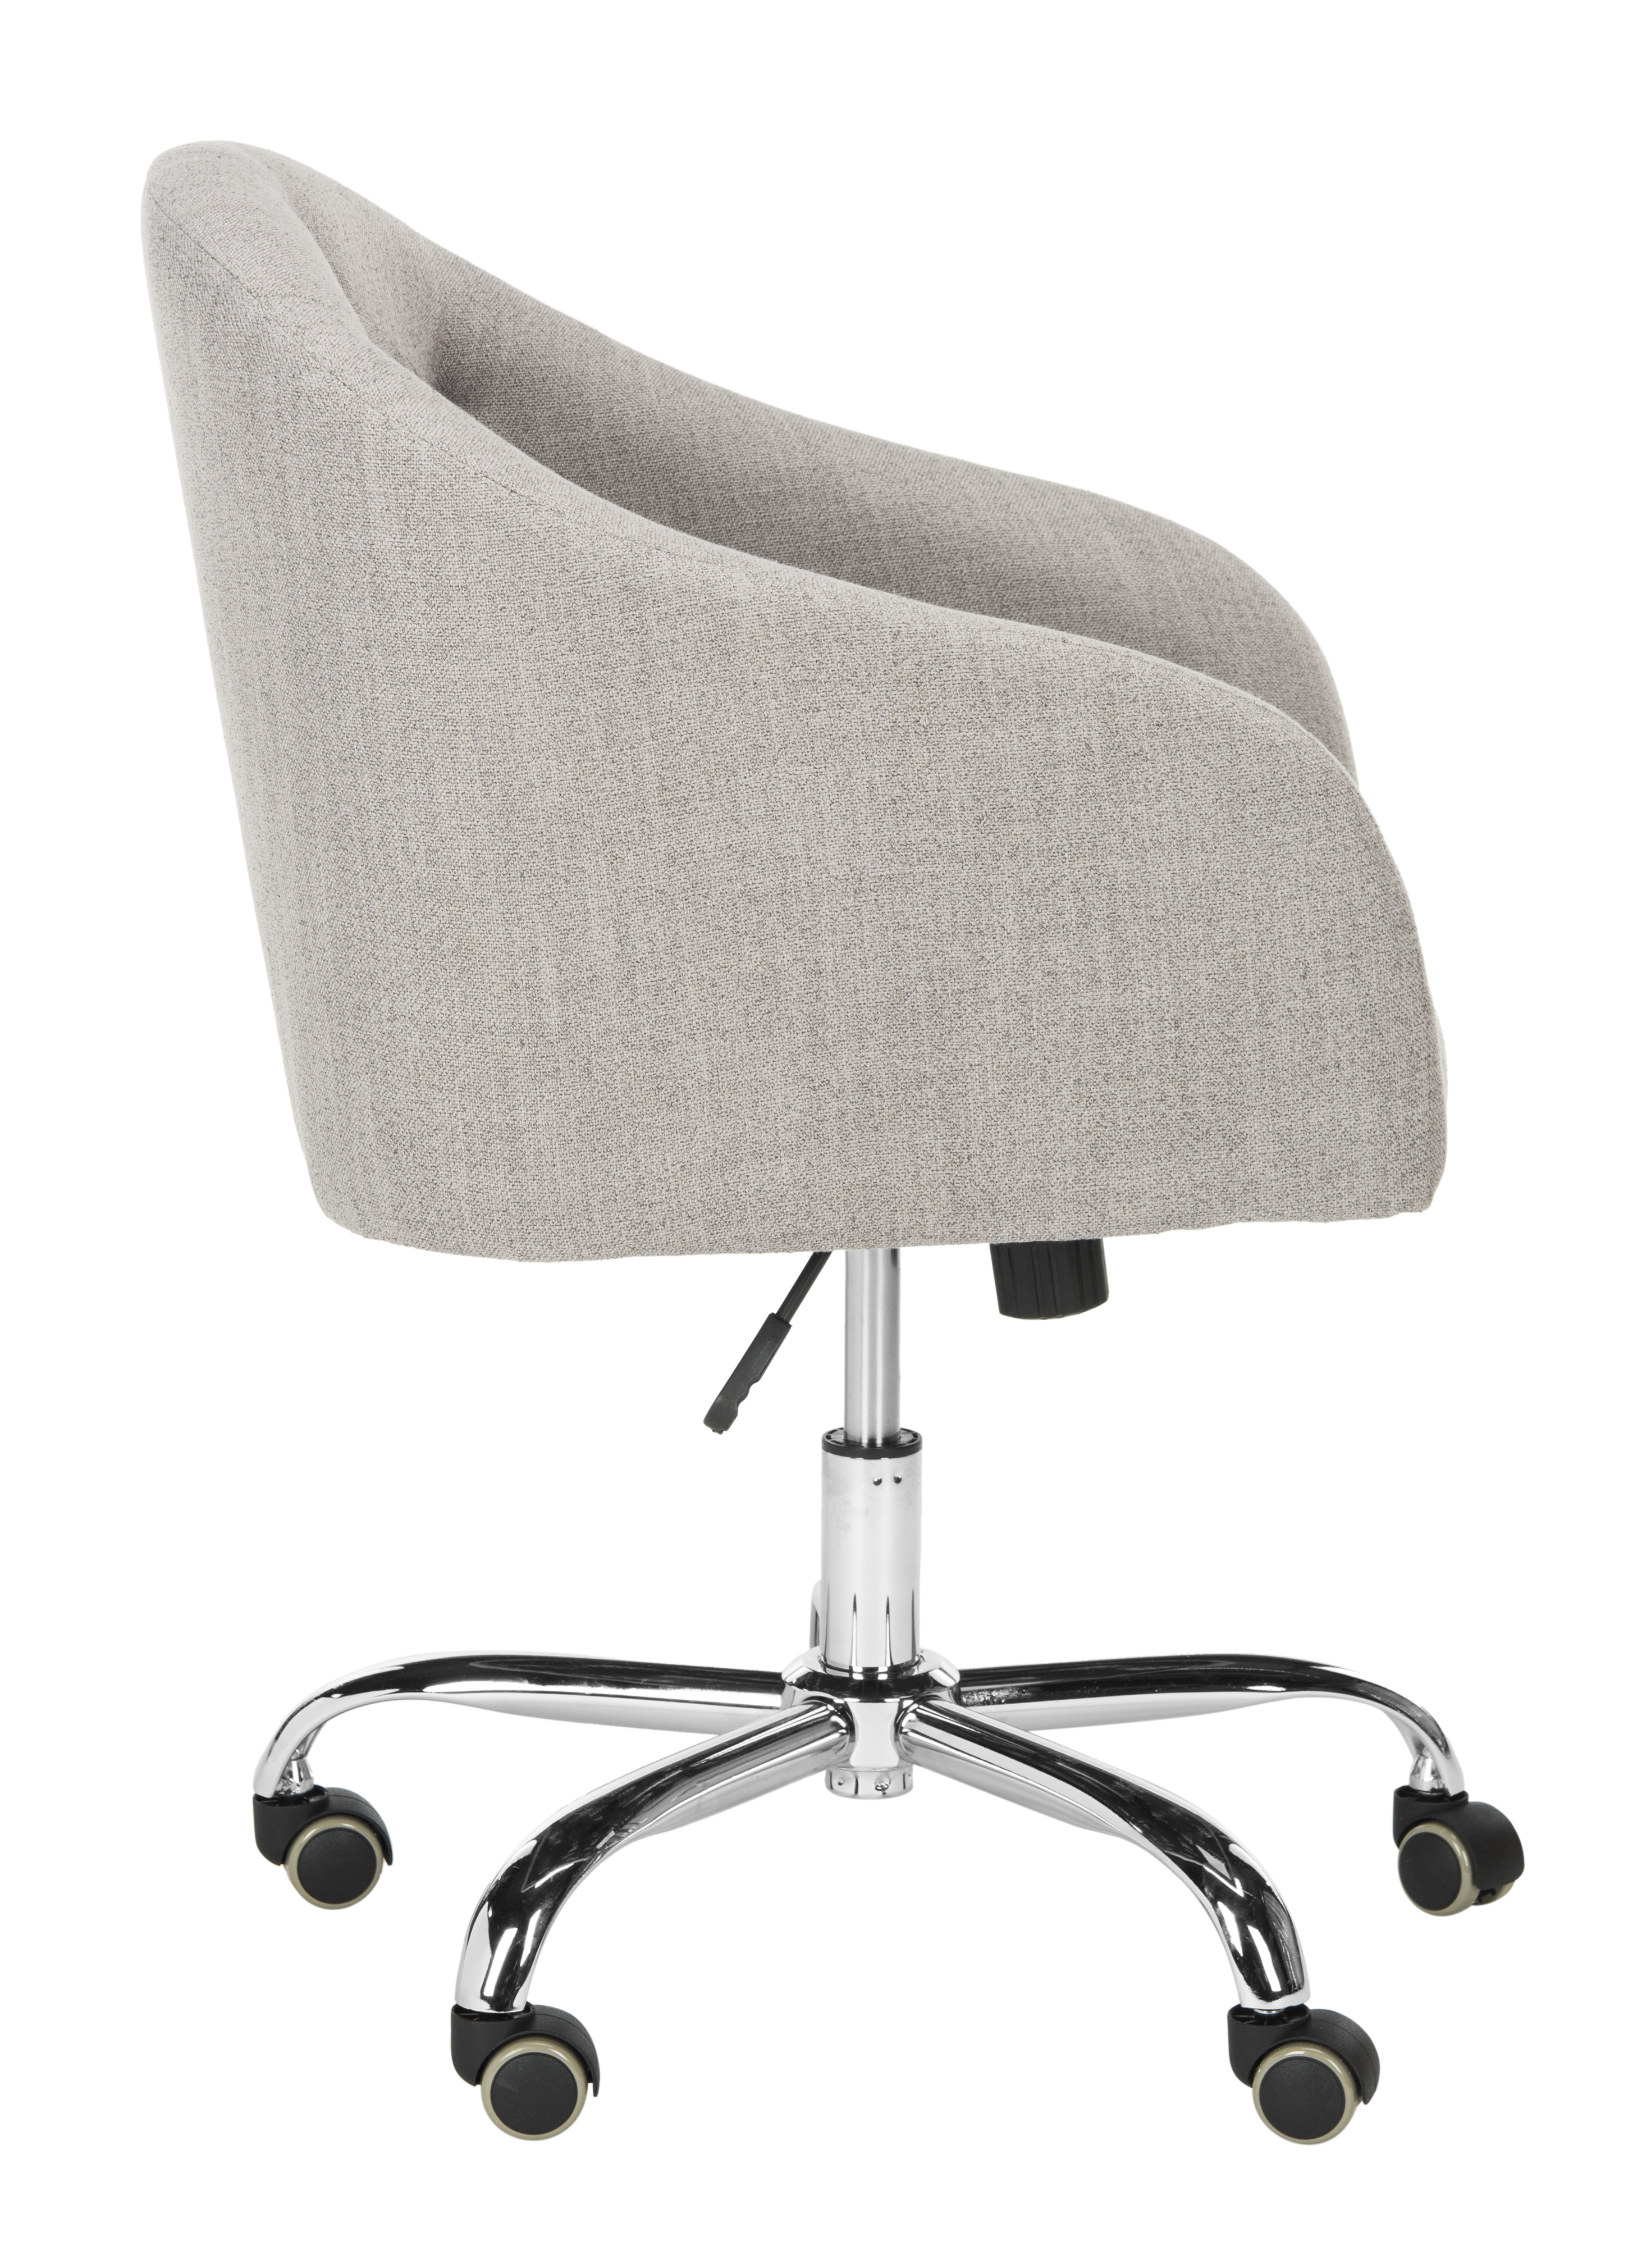 Amy Tufted Linen Chrome Leg Swivel Office Chair - Grey/Chrome - Arlo Home - Image 2